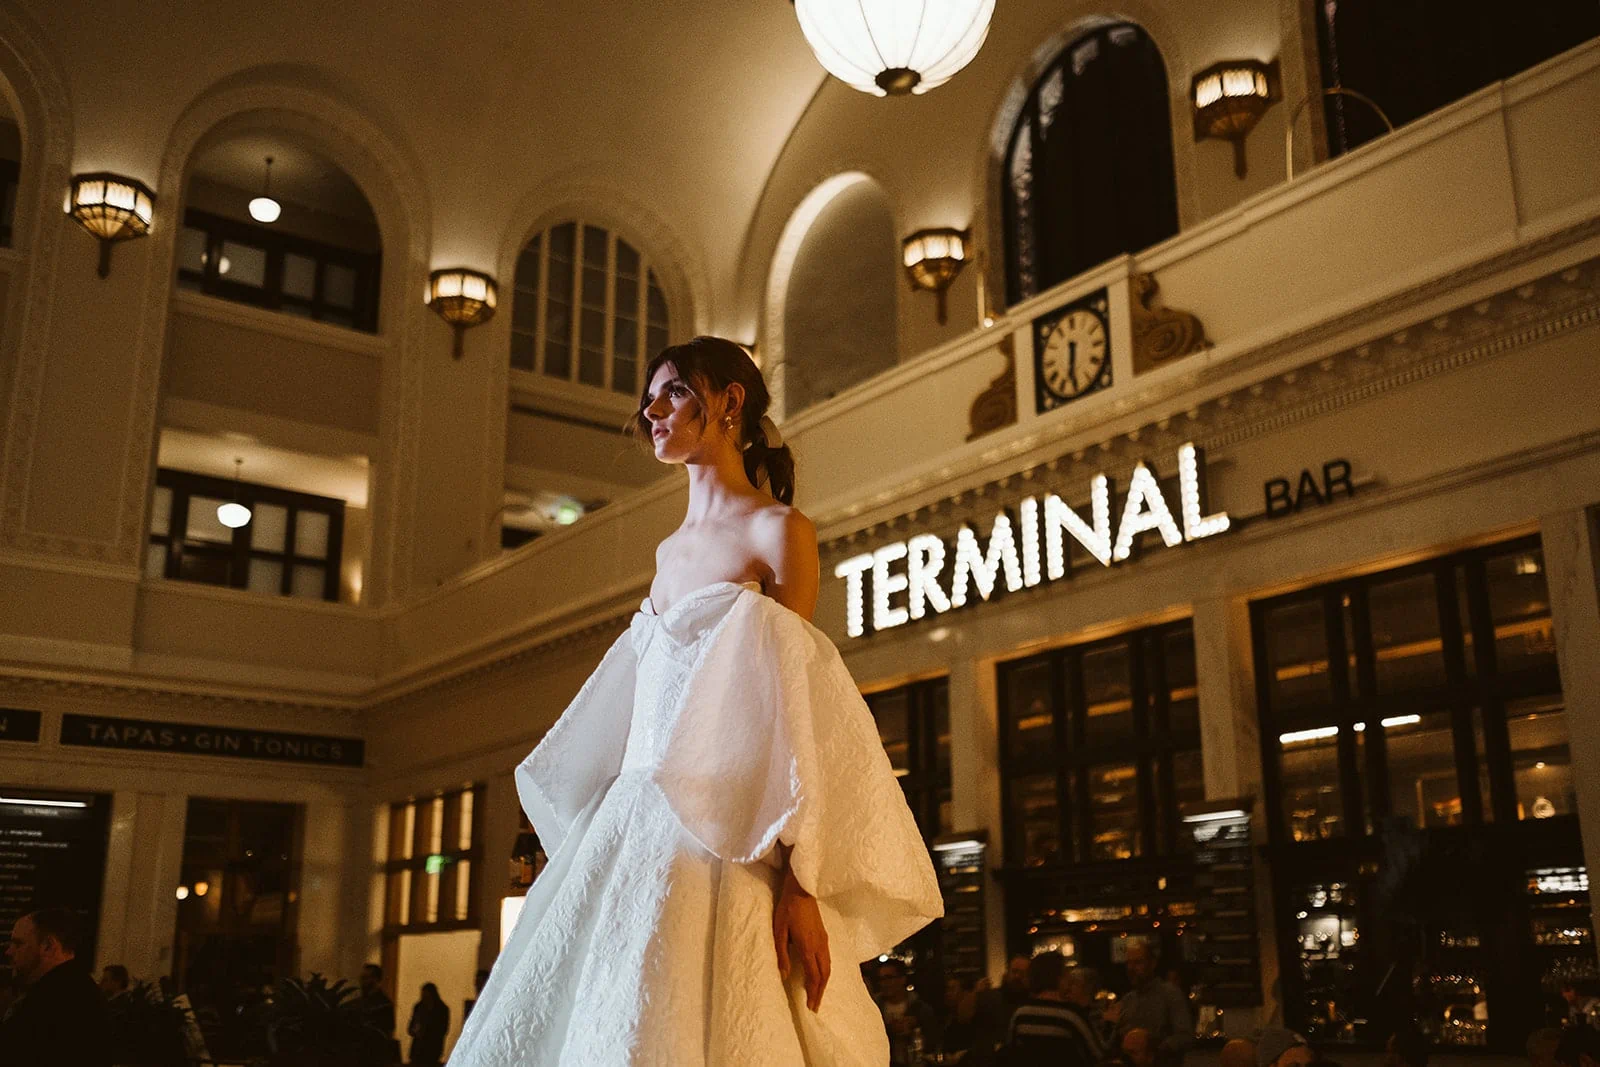 Union Station wedding fashion show with Little White Dress Bridal